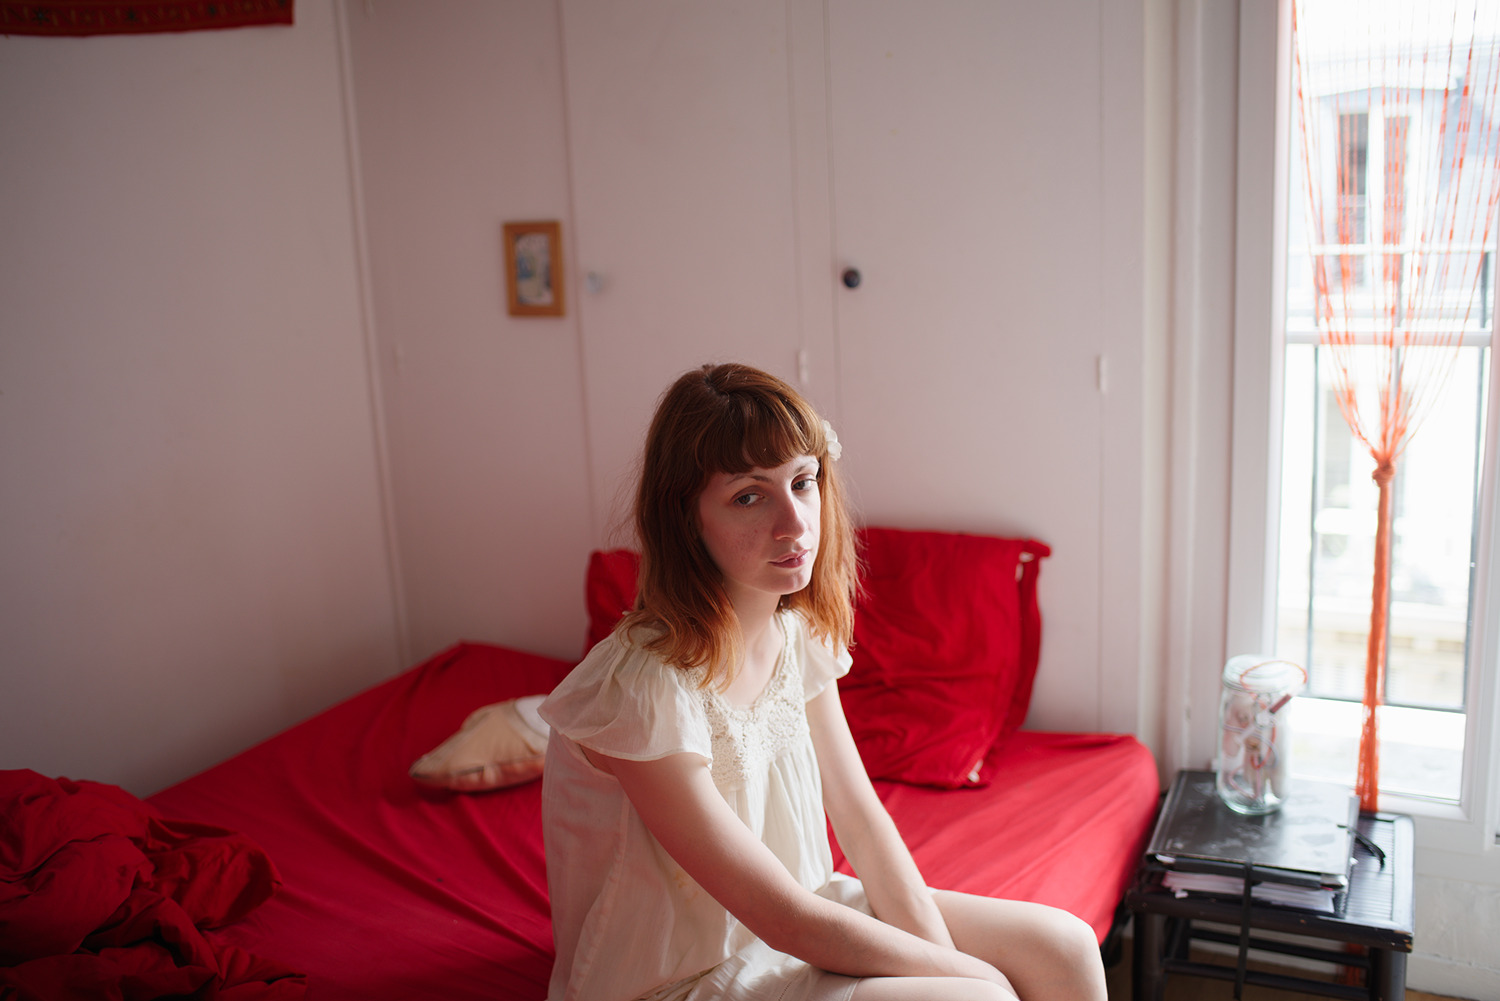 Rosane on her bed, Paris, 2016